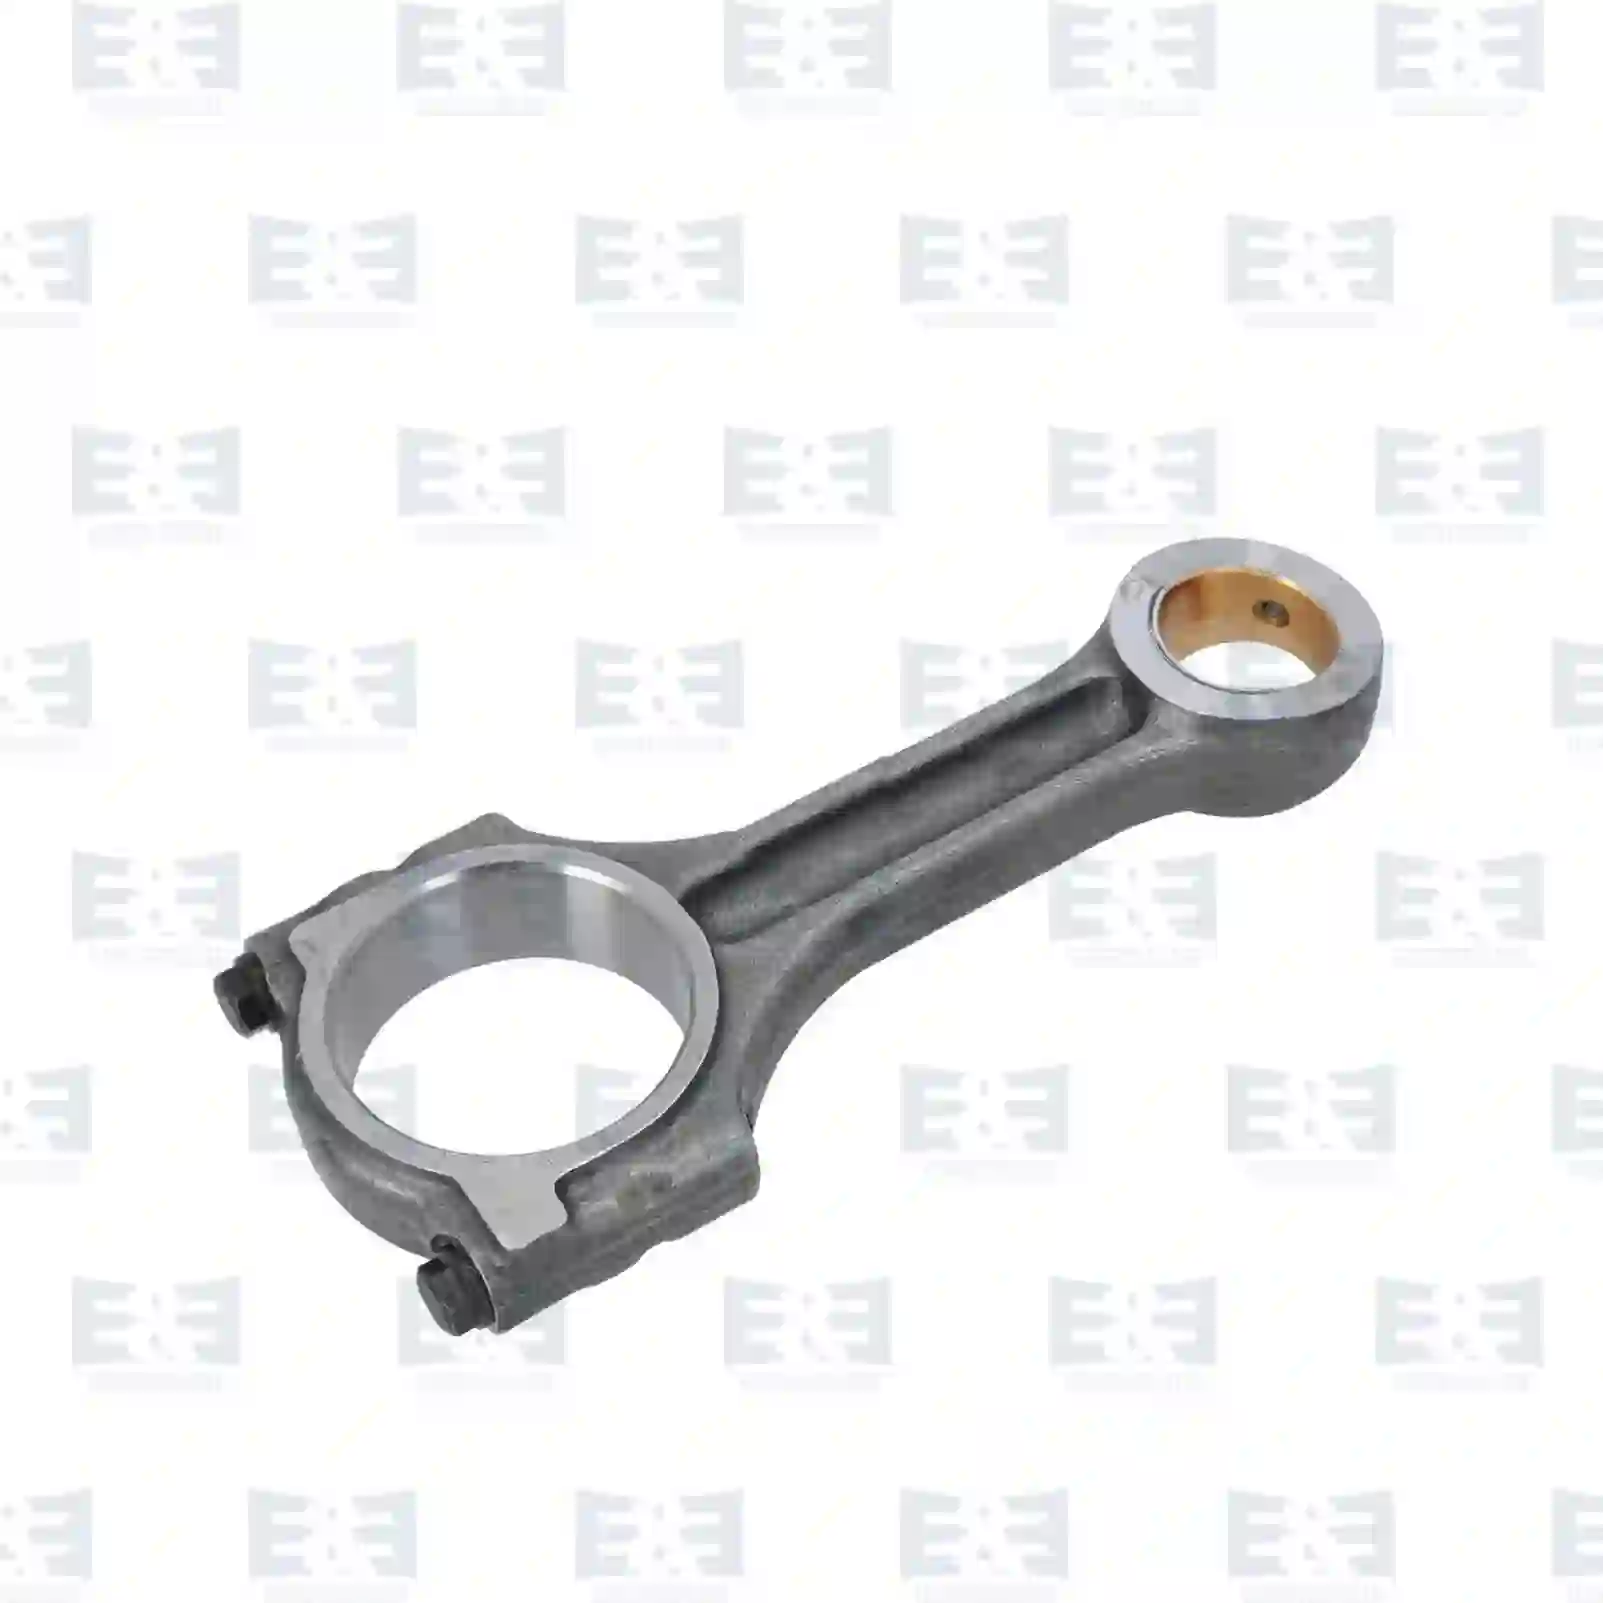  Connecting rod || E&E Truck Spare Parts | Truck Spare Parts, Auotomotive Spare Parts